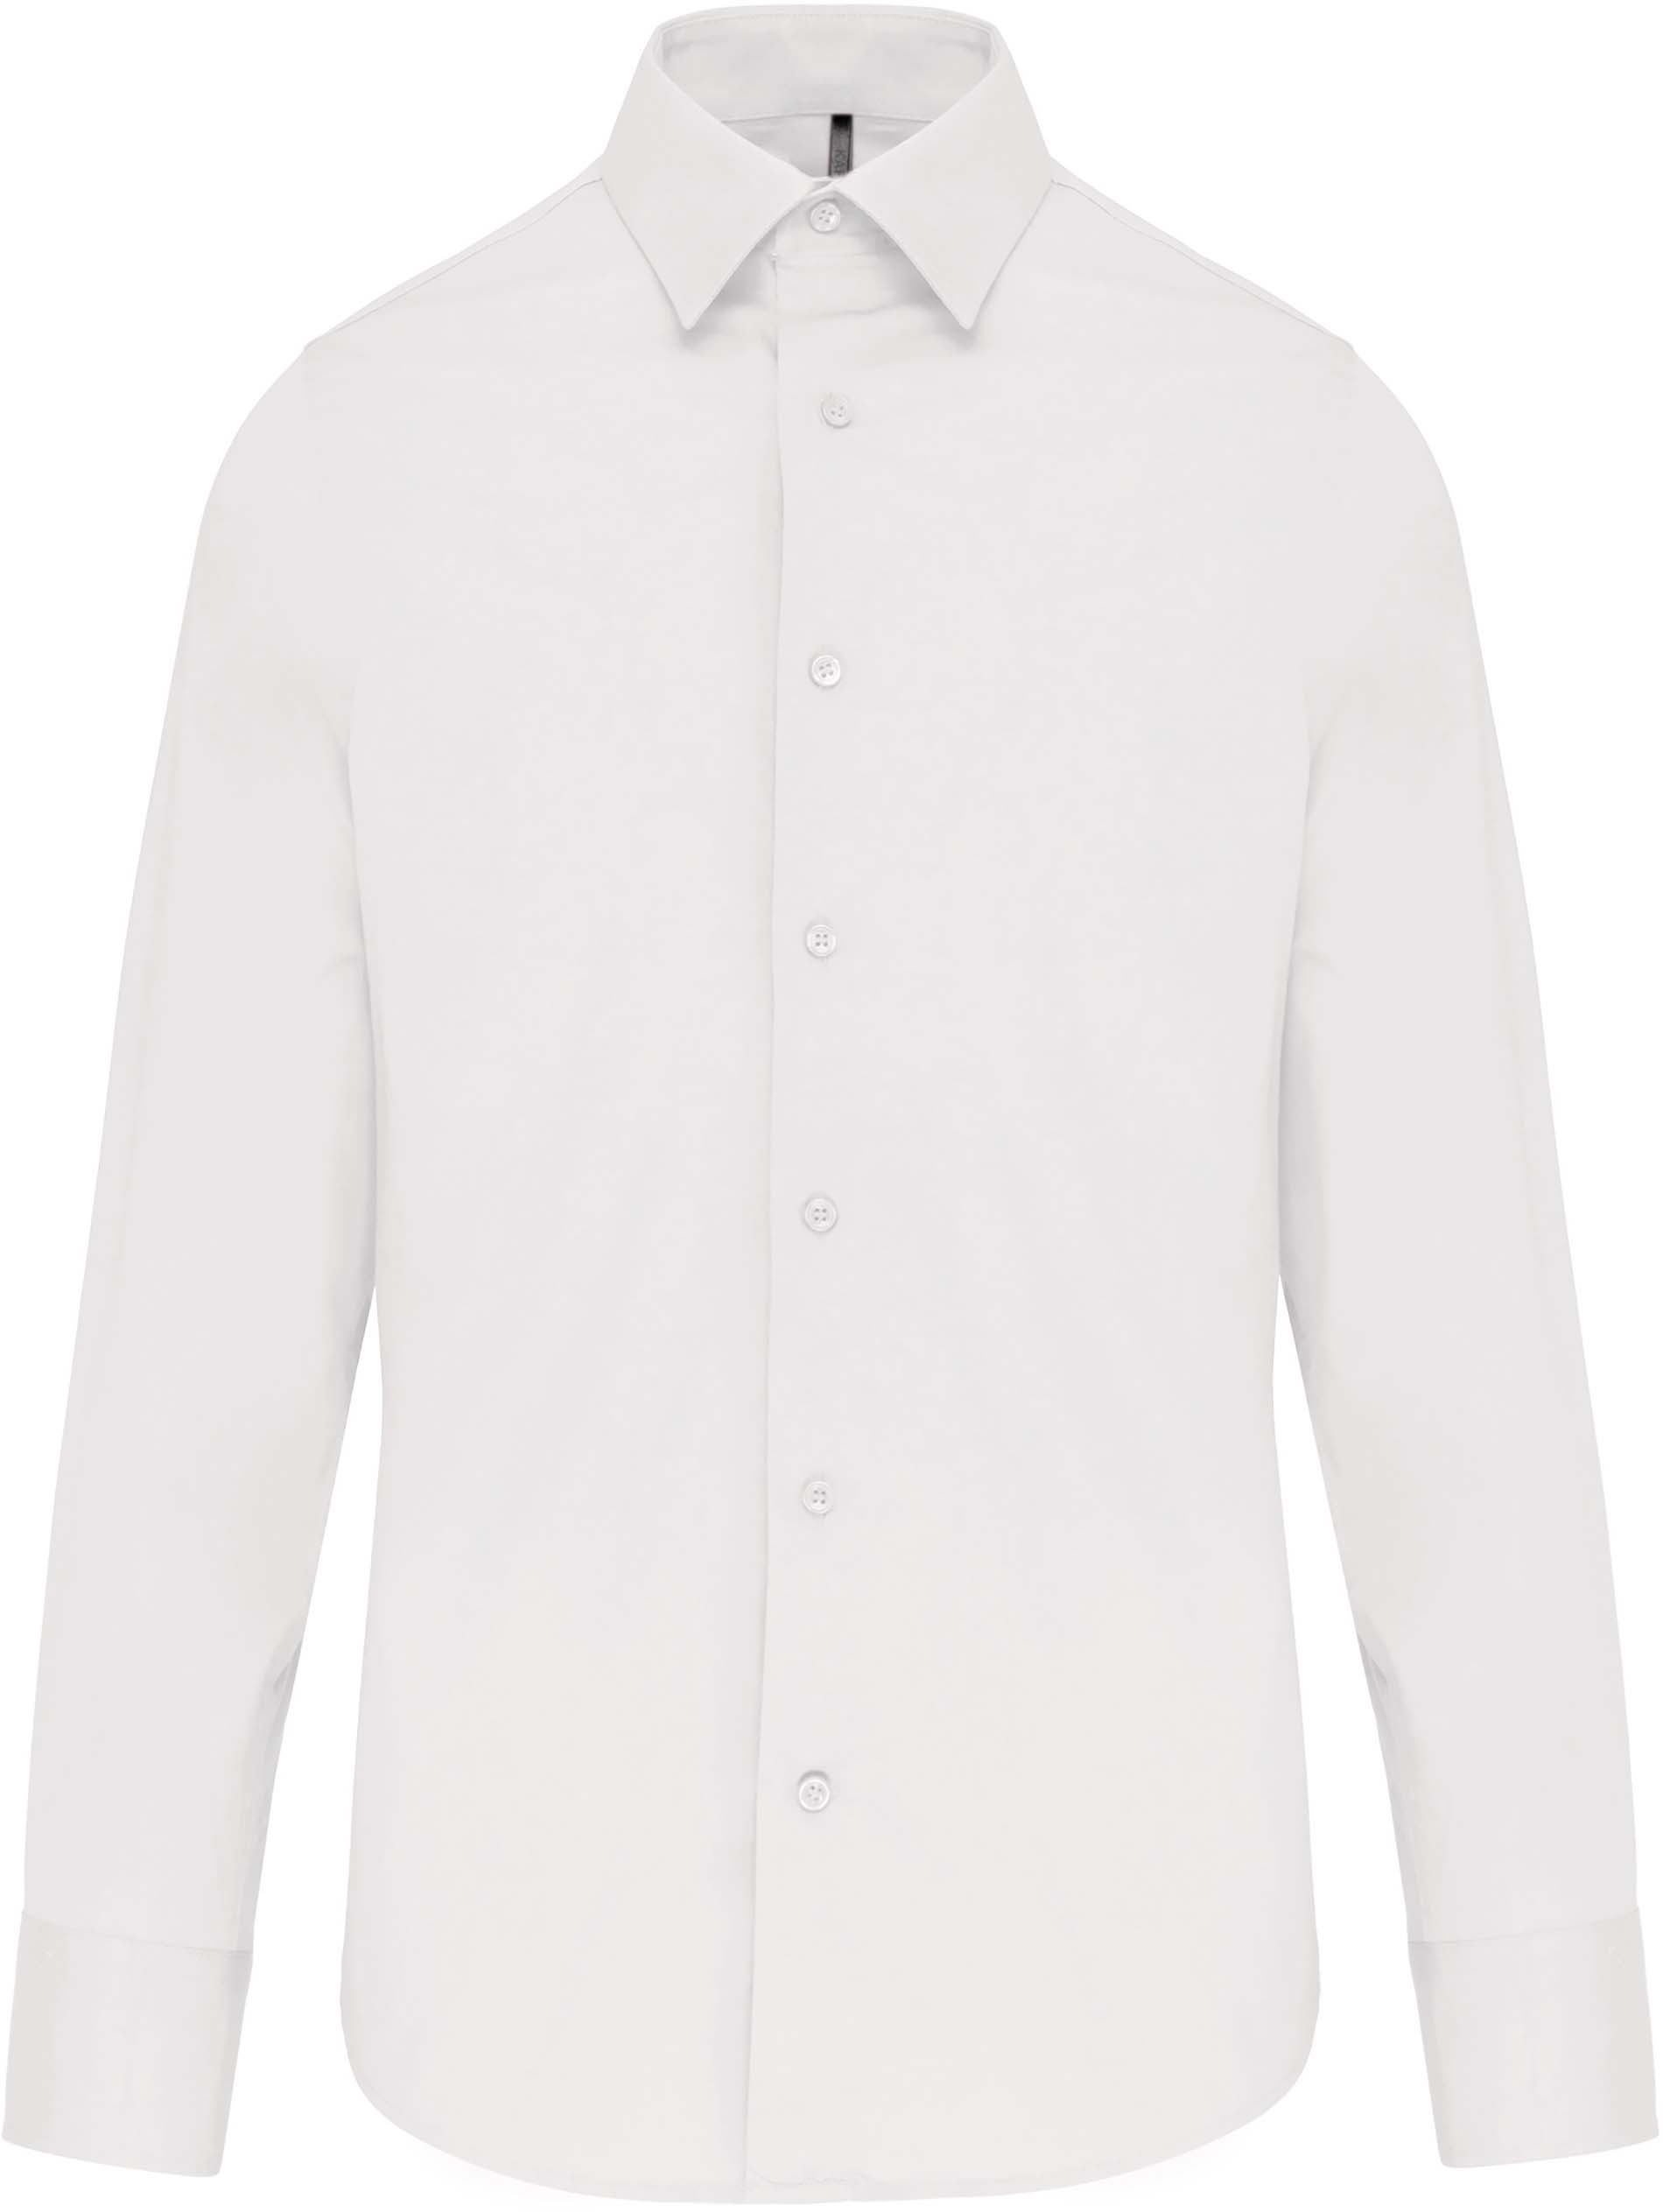 Pánská strečová košile s dlouhým rukávem Velikost: S, Barva: white, Rozměr: 76,30/51